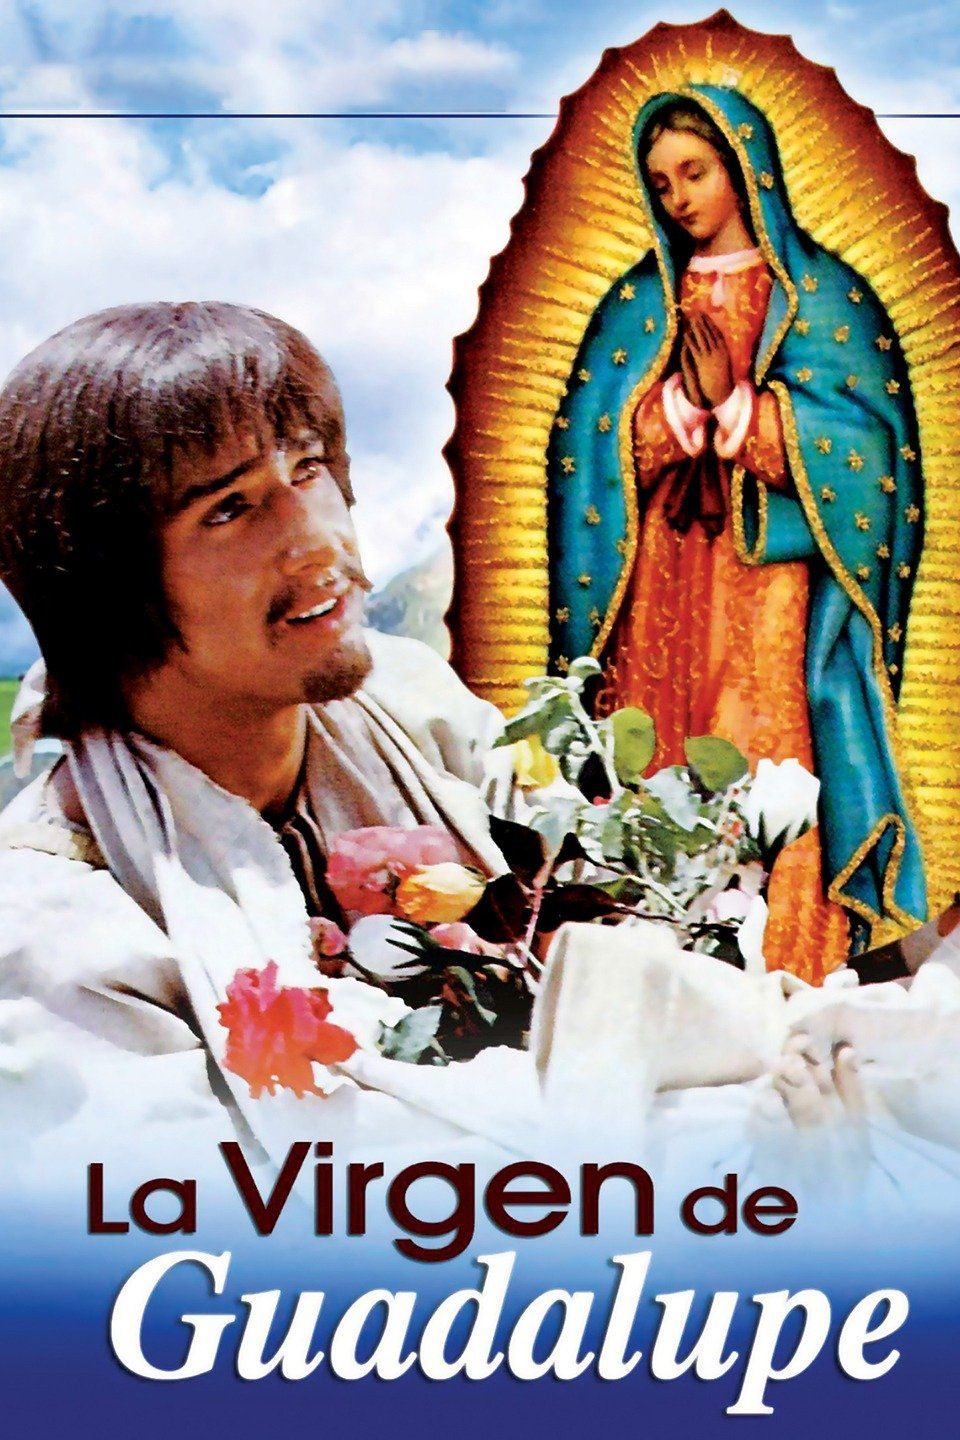 Los verduleros (1986) — The Movie Database (TMDB)